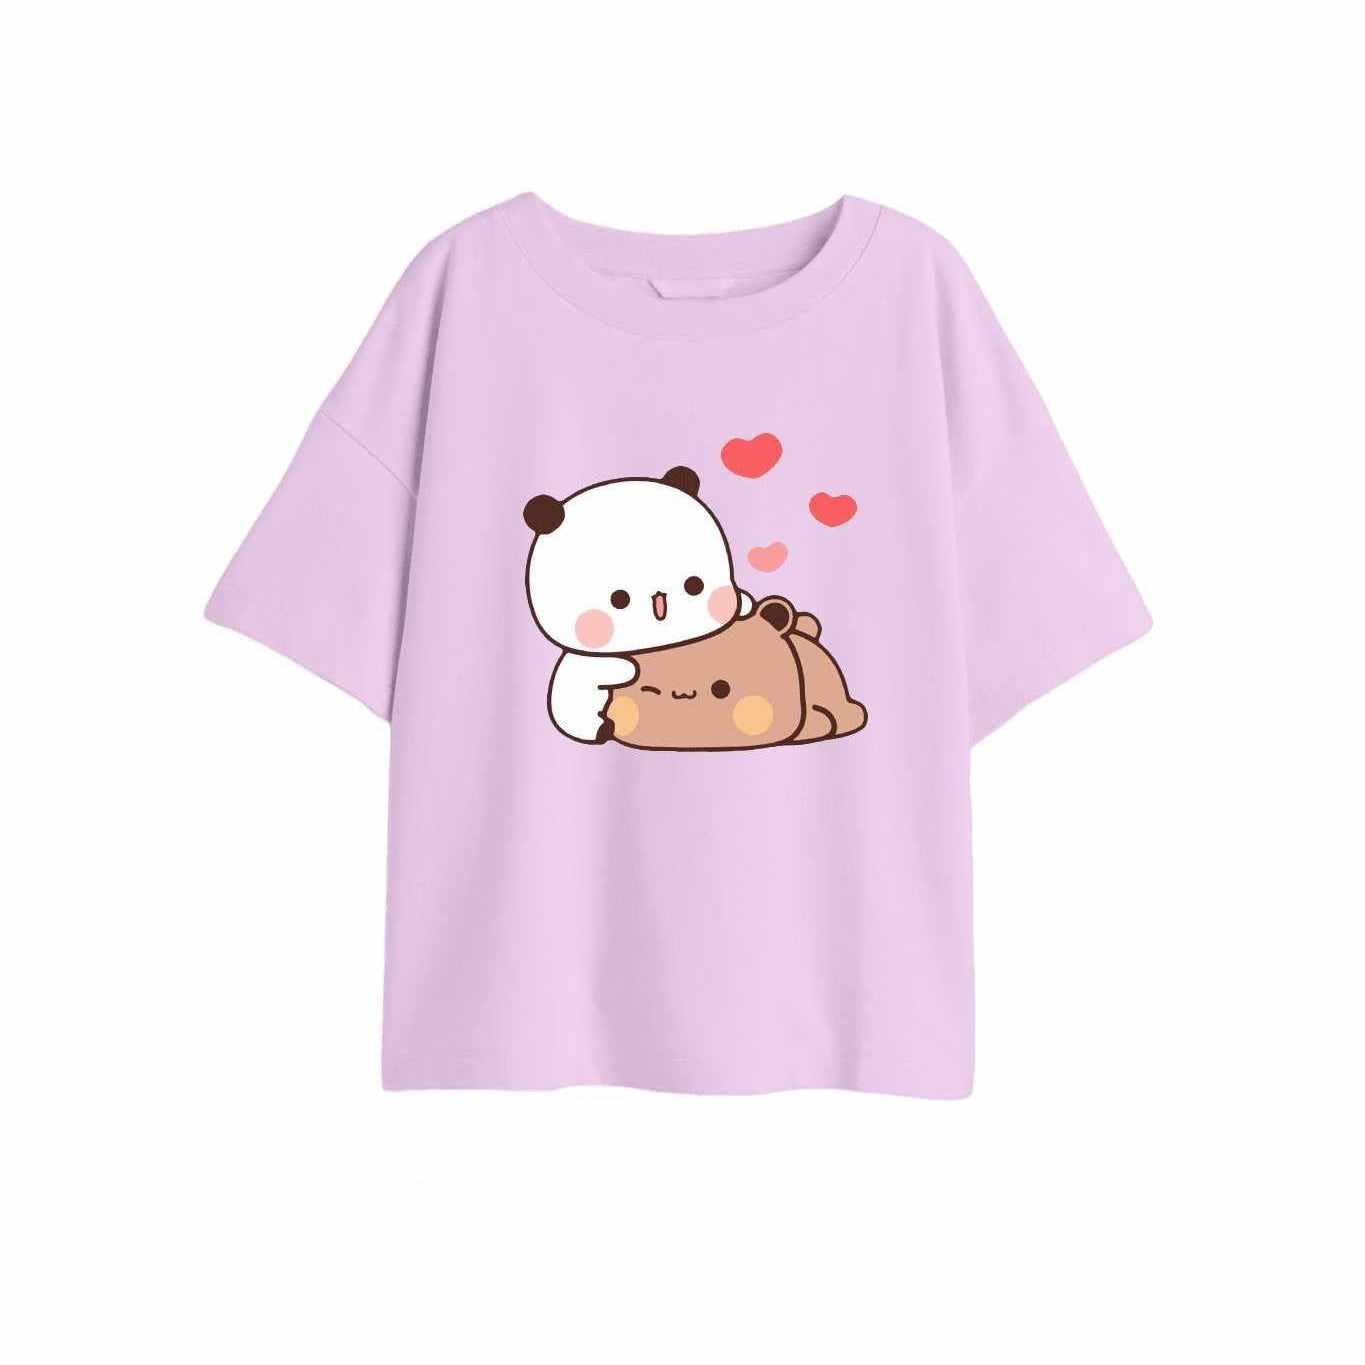 Panda T shirt Couple